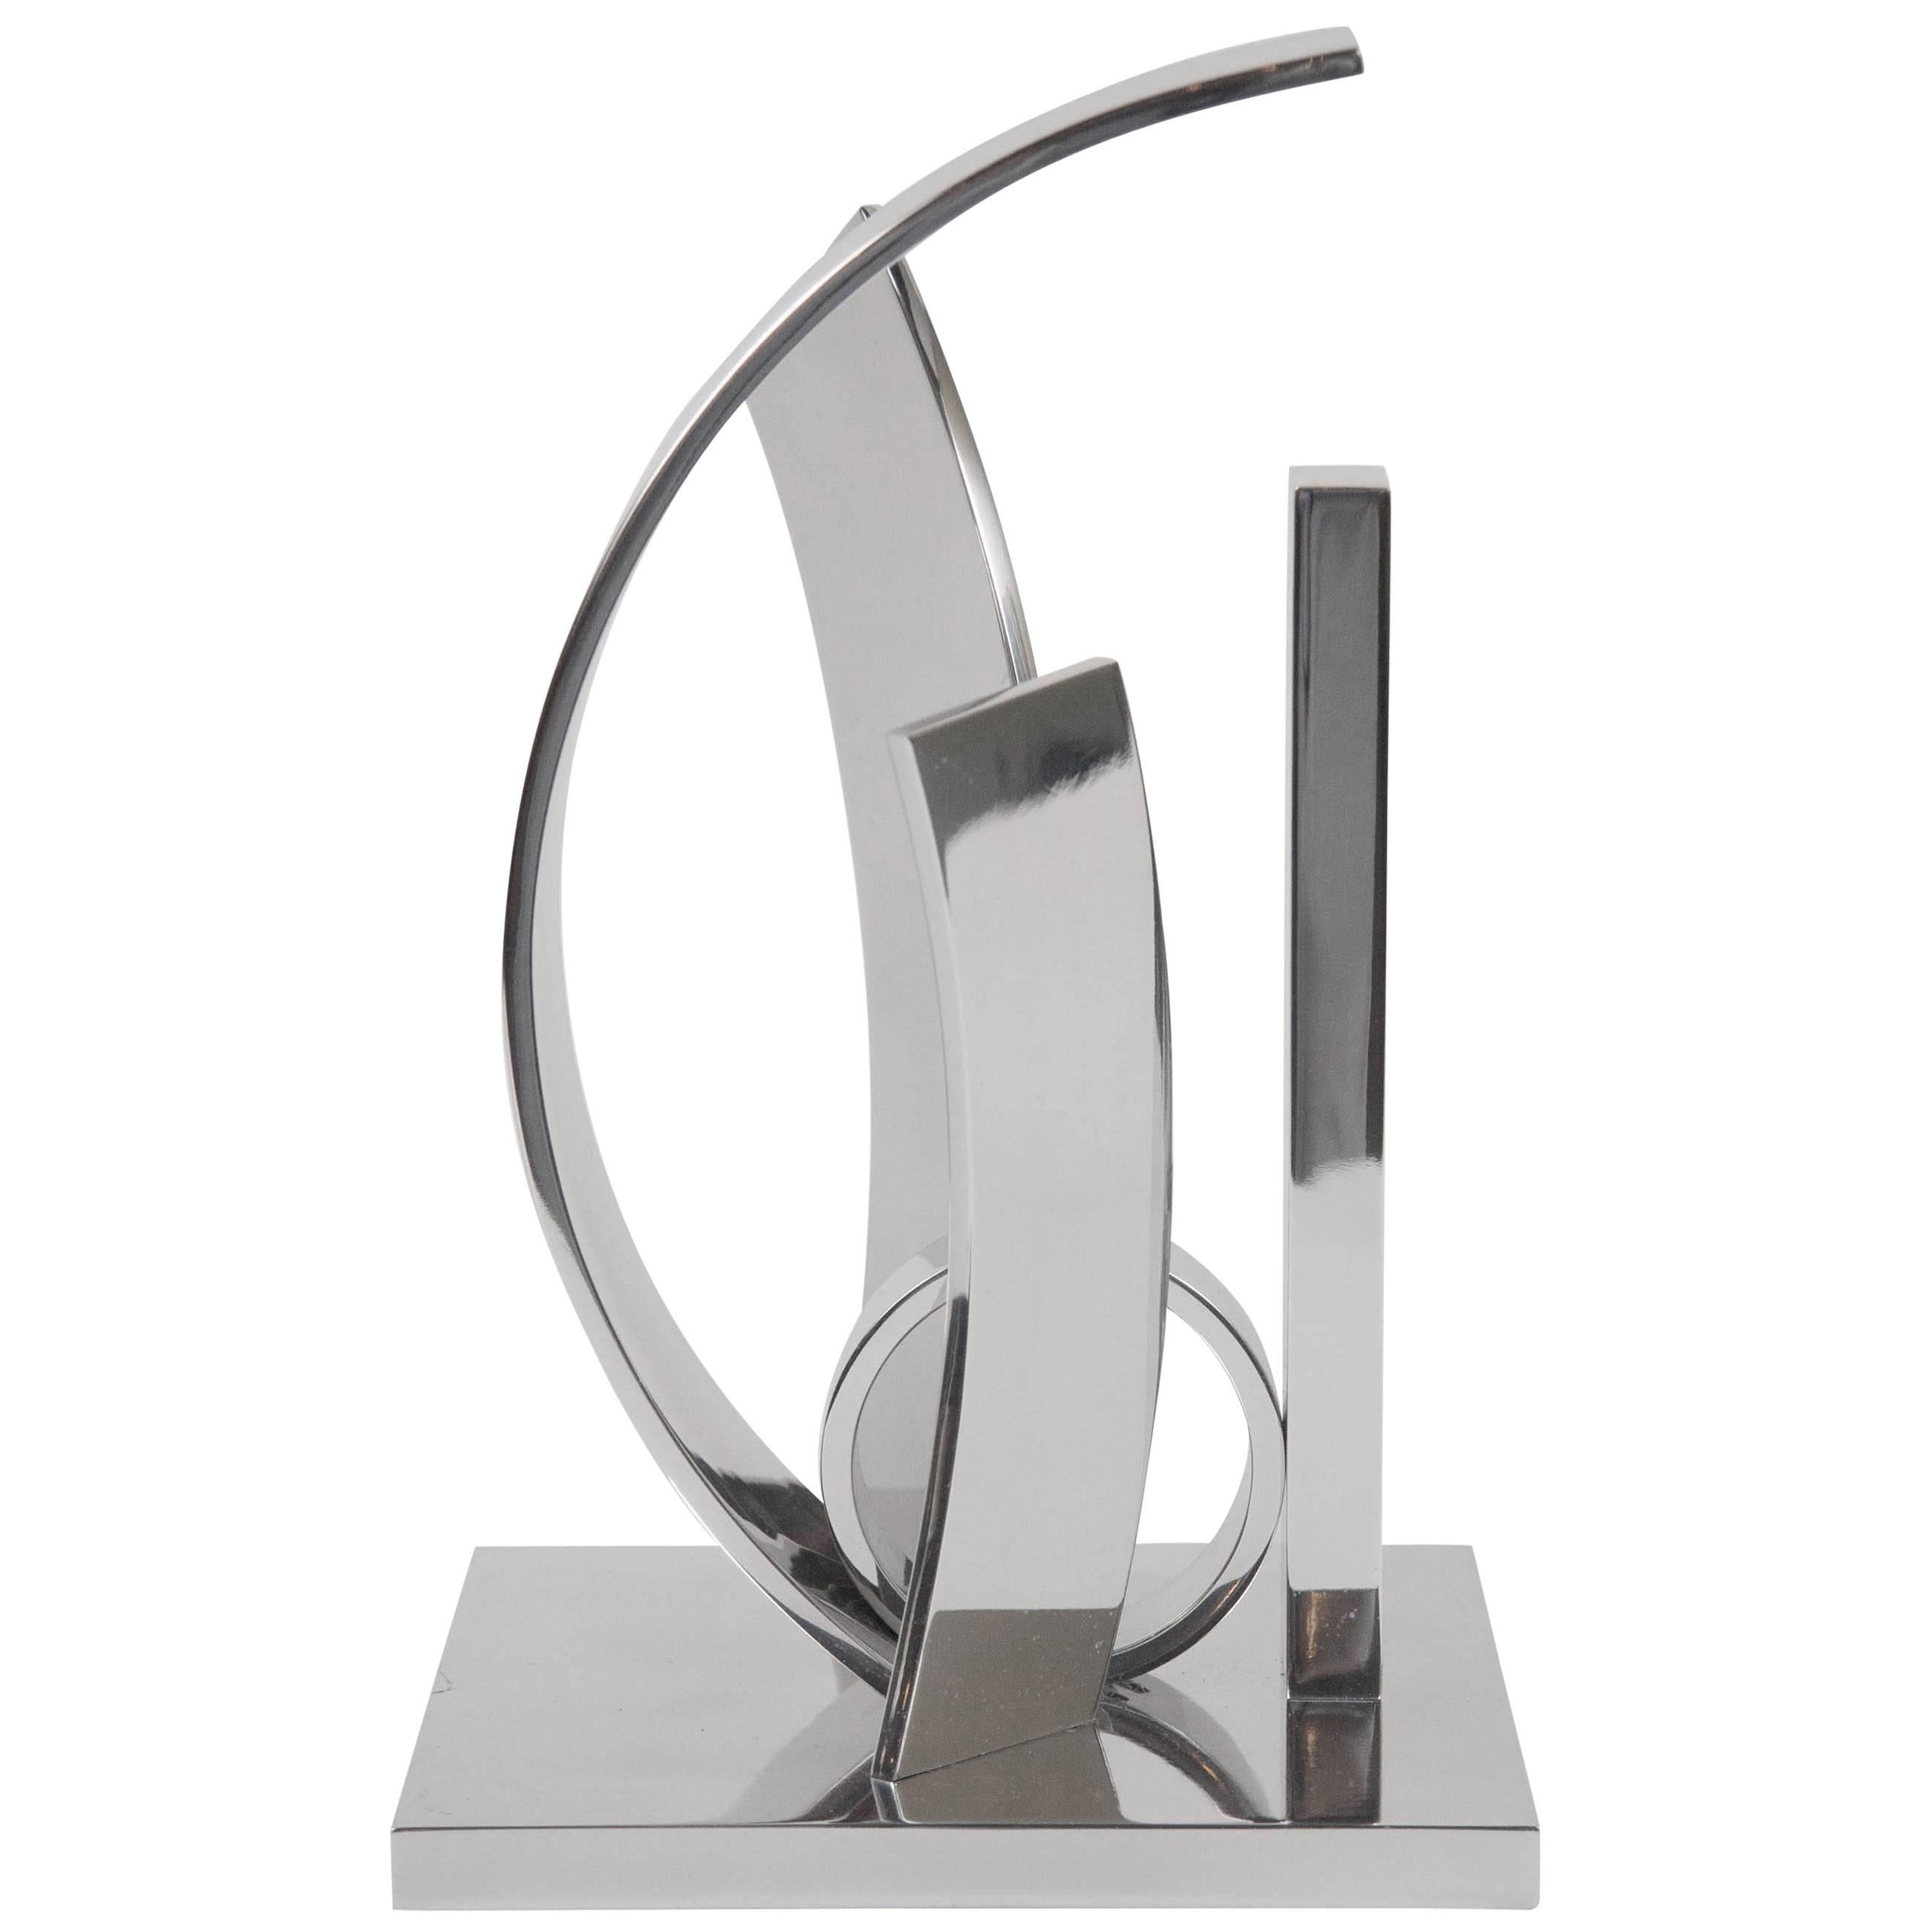 Sculpture en aluminium poli "Surge" d'Alexander Liberman